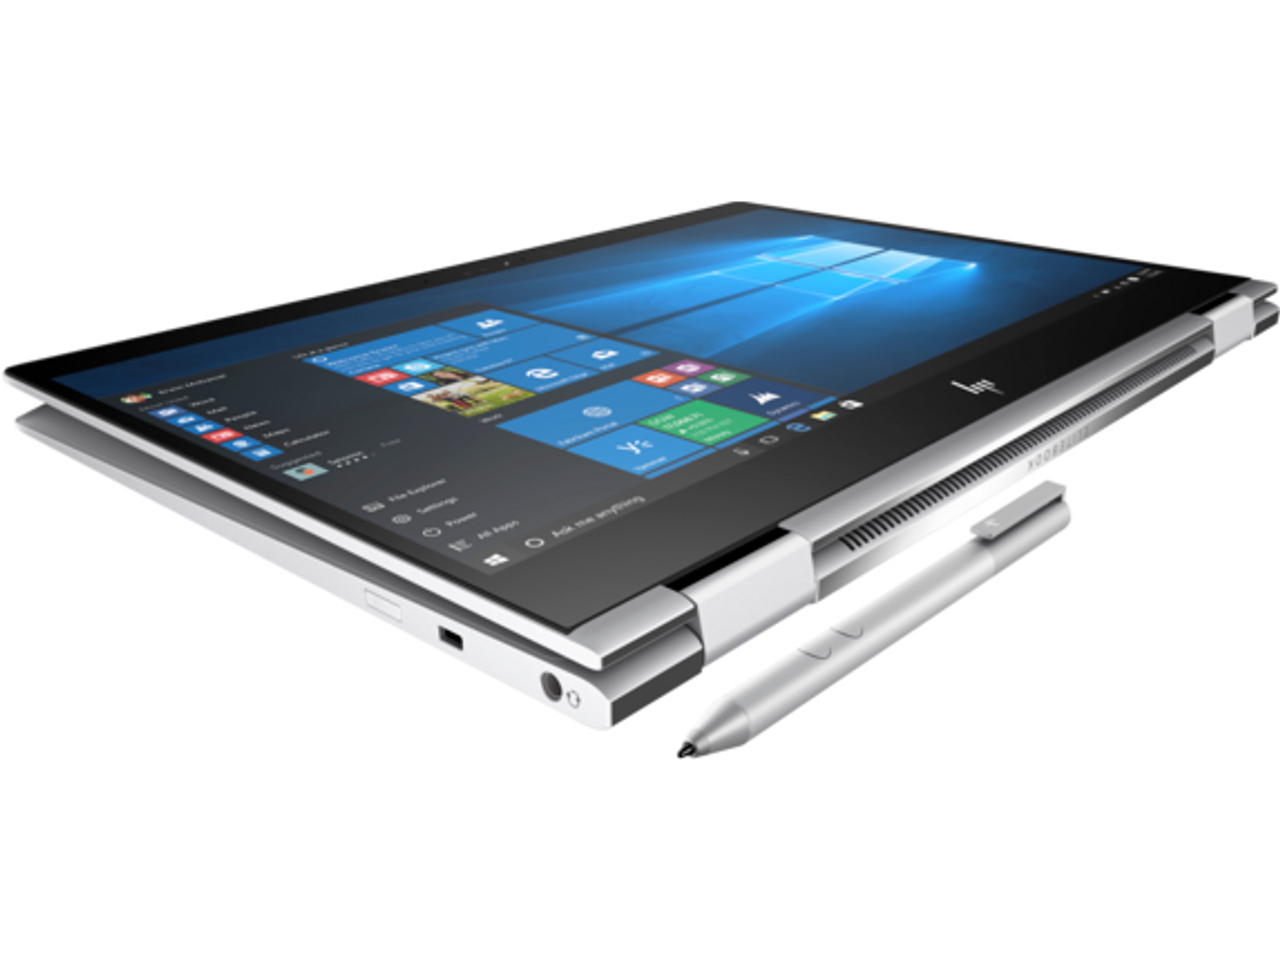 HP EliteBook x360 1020 G2 Core i7 7500U-